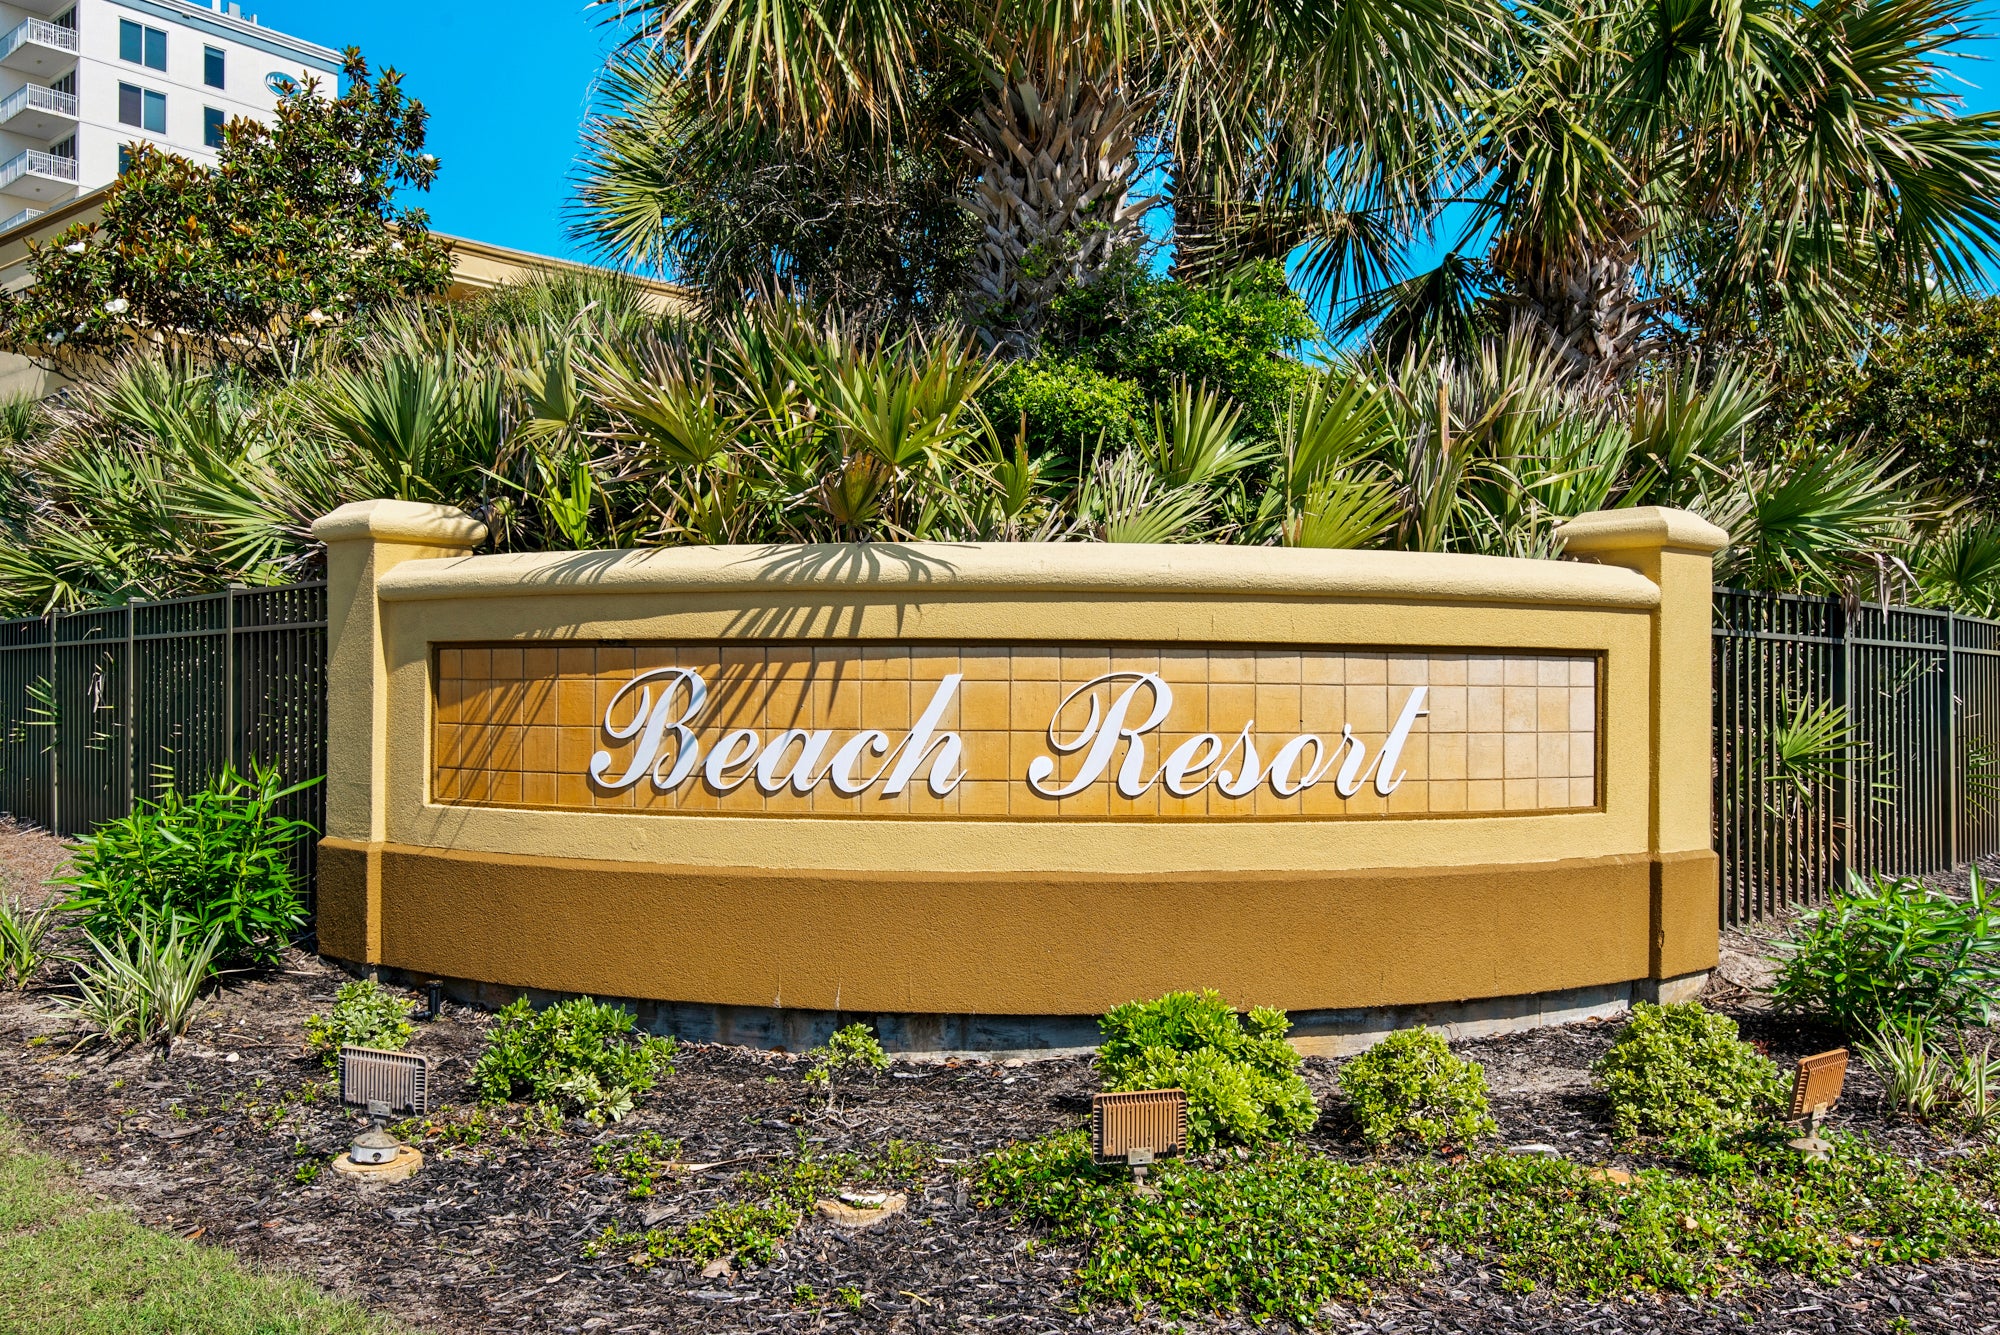 Welcome to Beach Resort